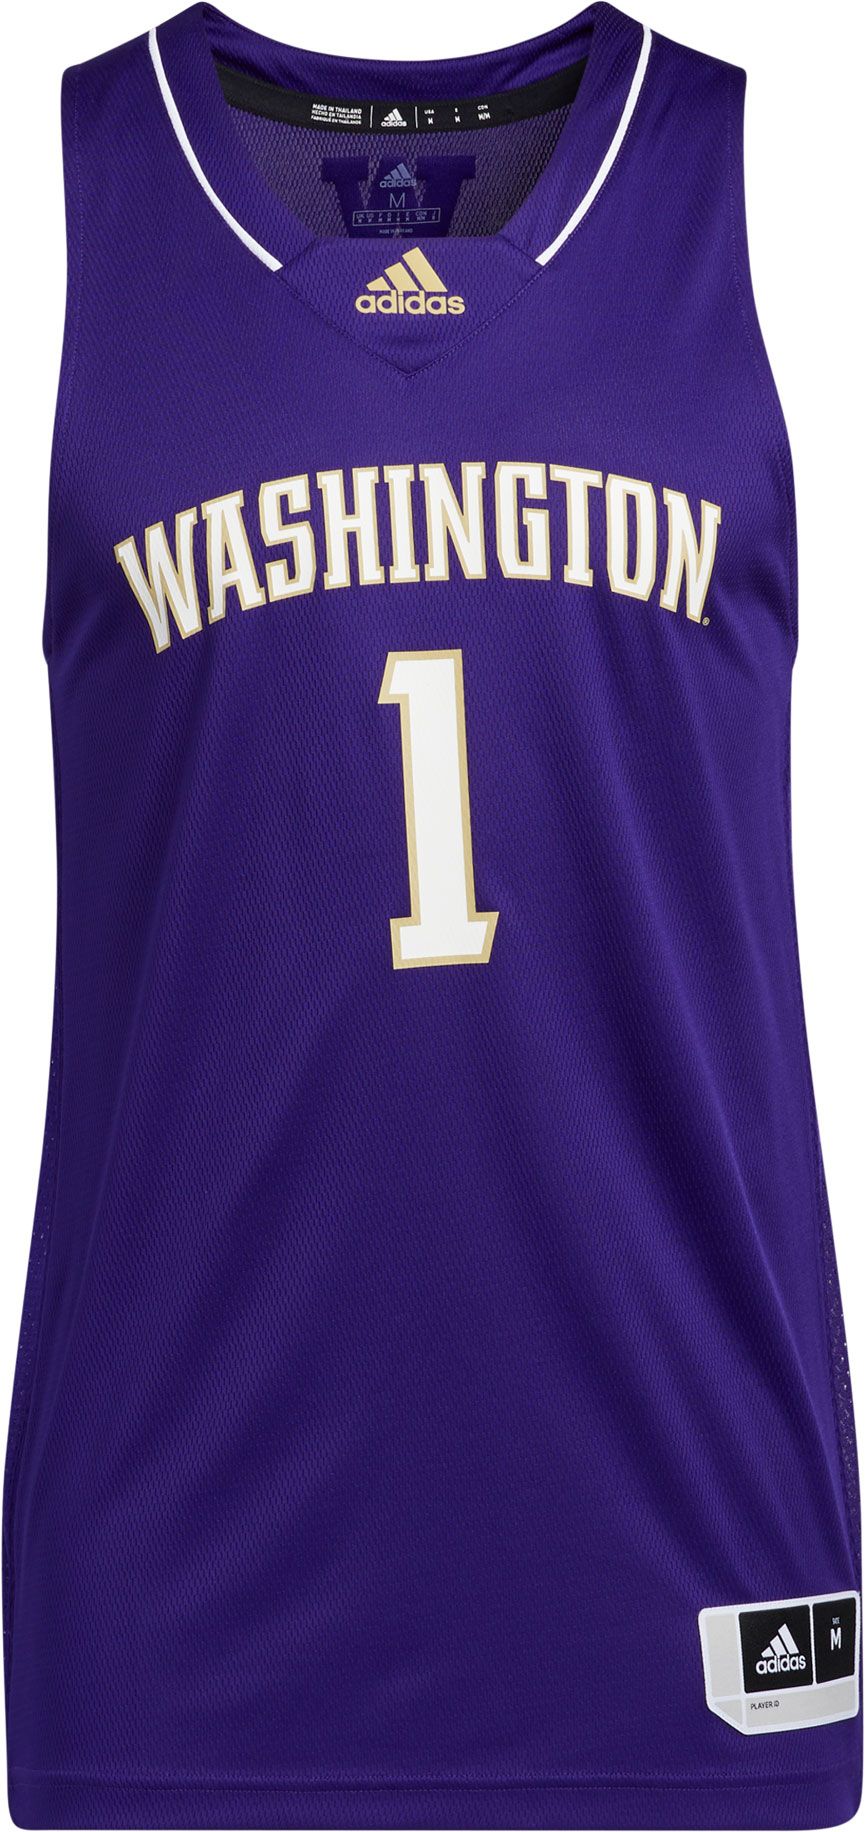 adidas Men's Washington Huskies #1 Purple Swingman Replica Basketball Jersey